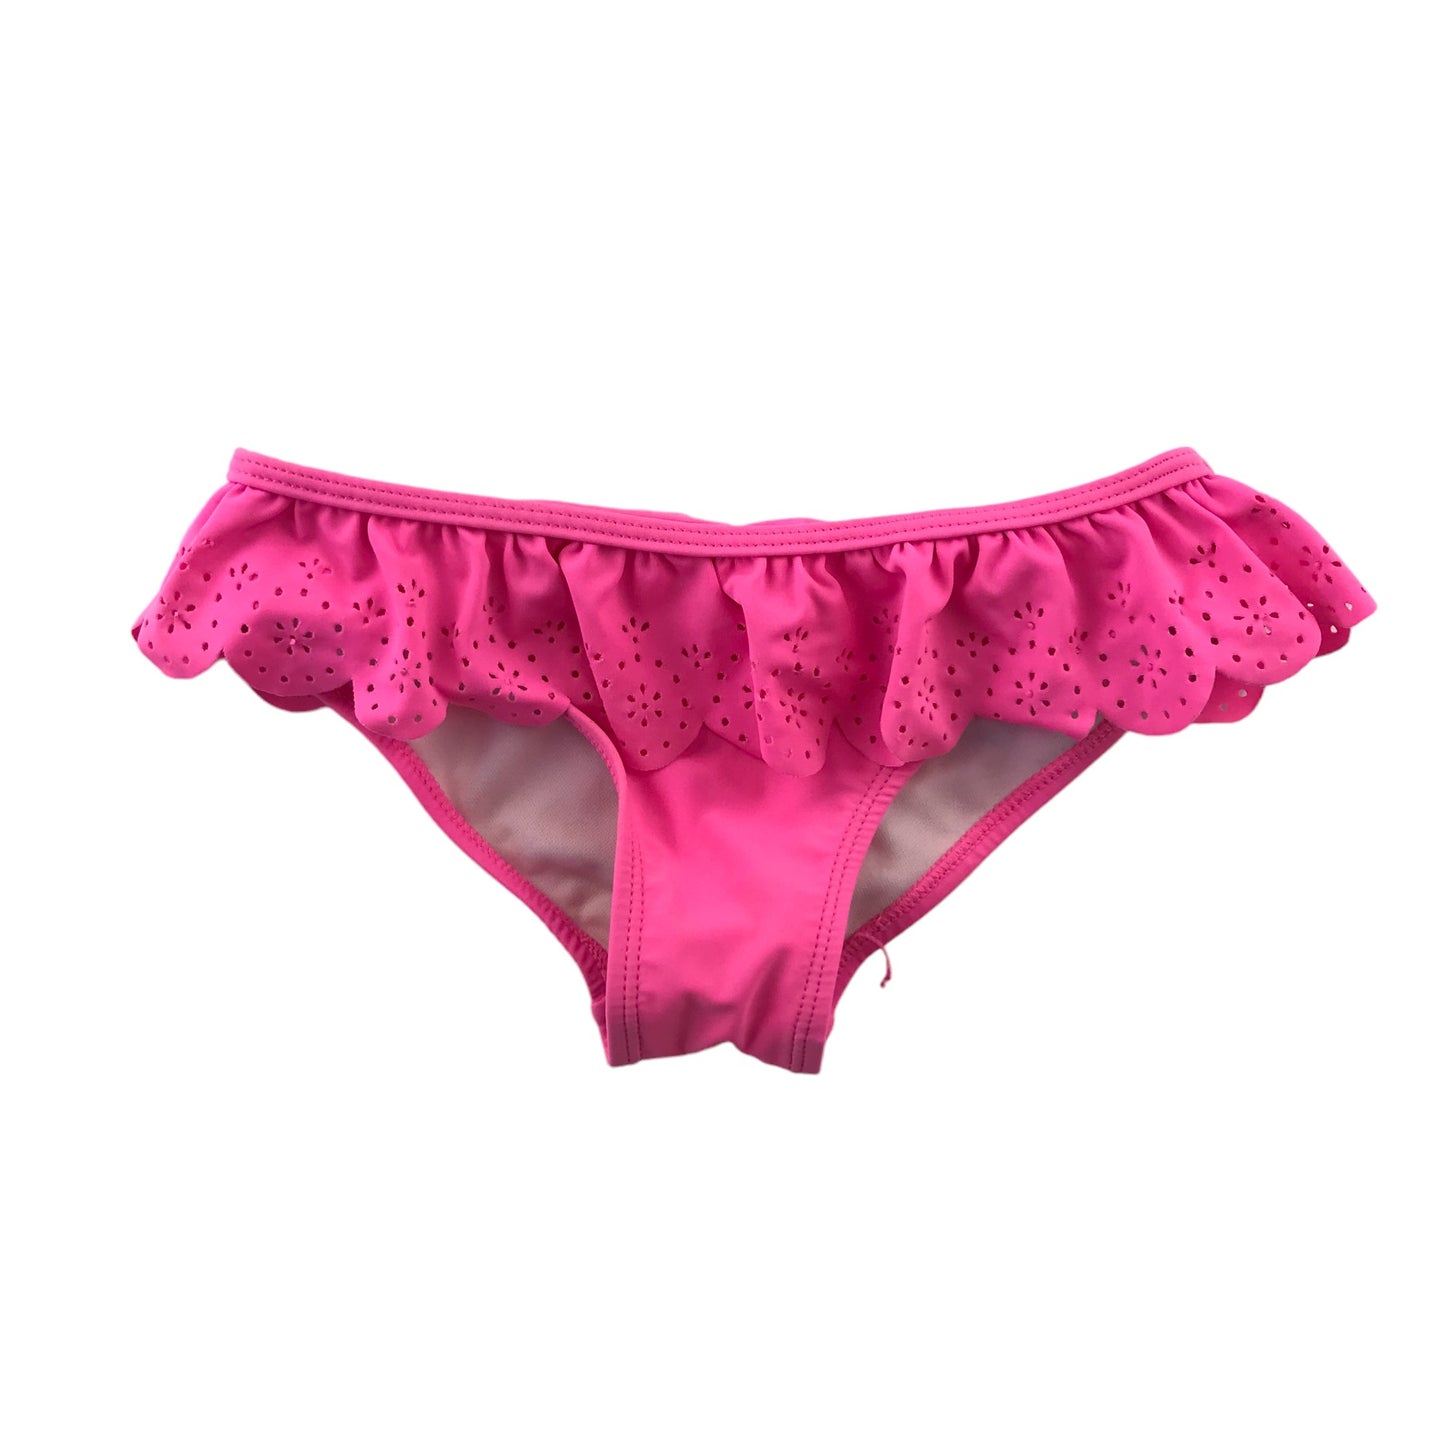 Primark Swimsuit 6-7 years pink and purple frilled bikini set